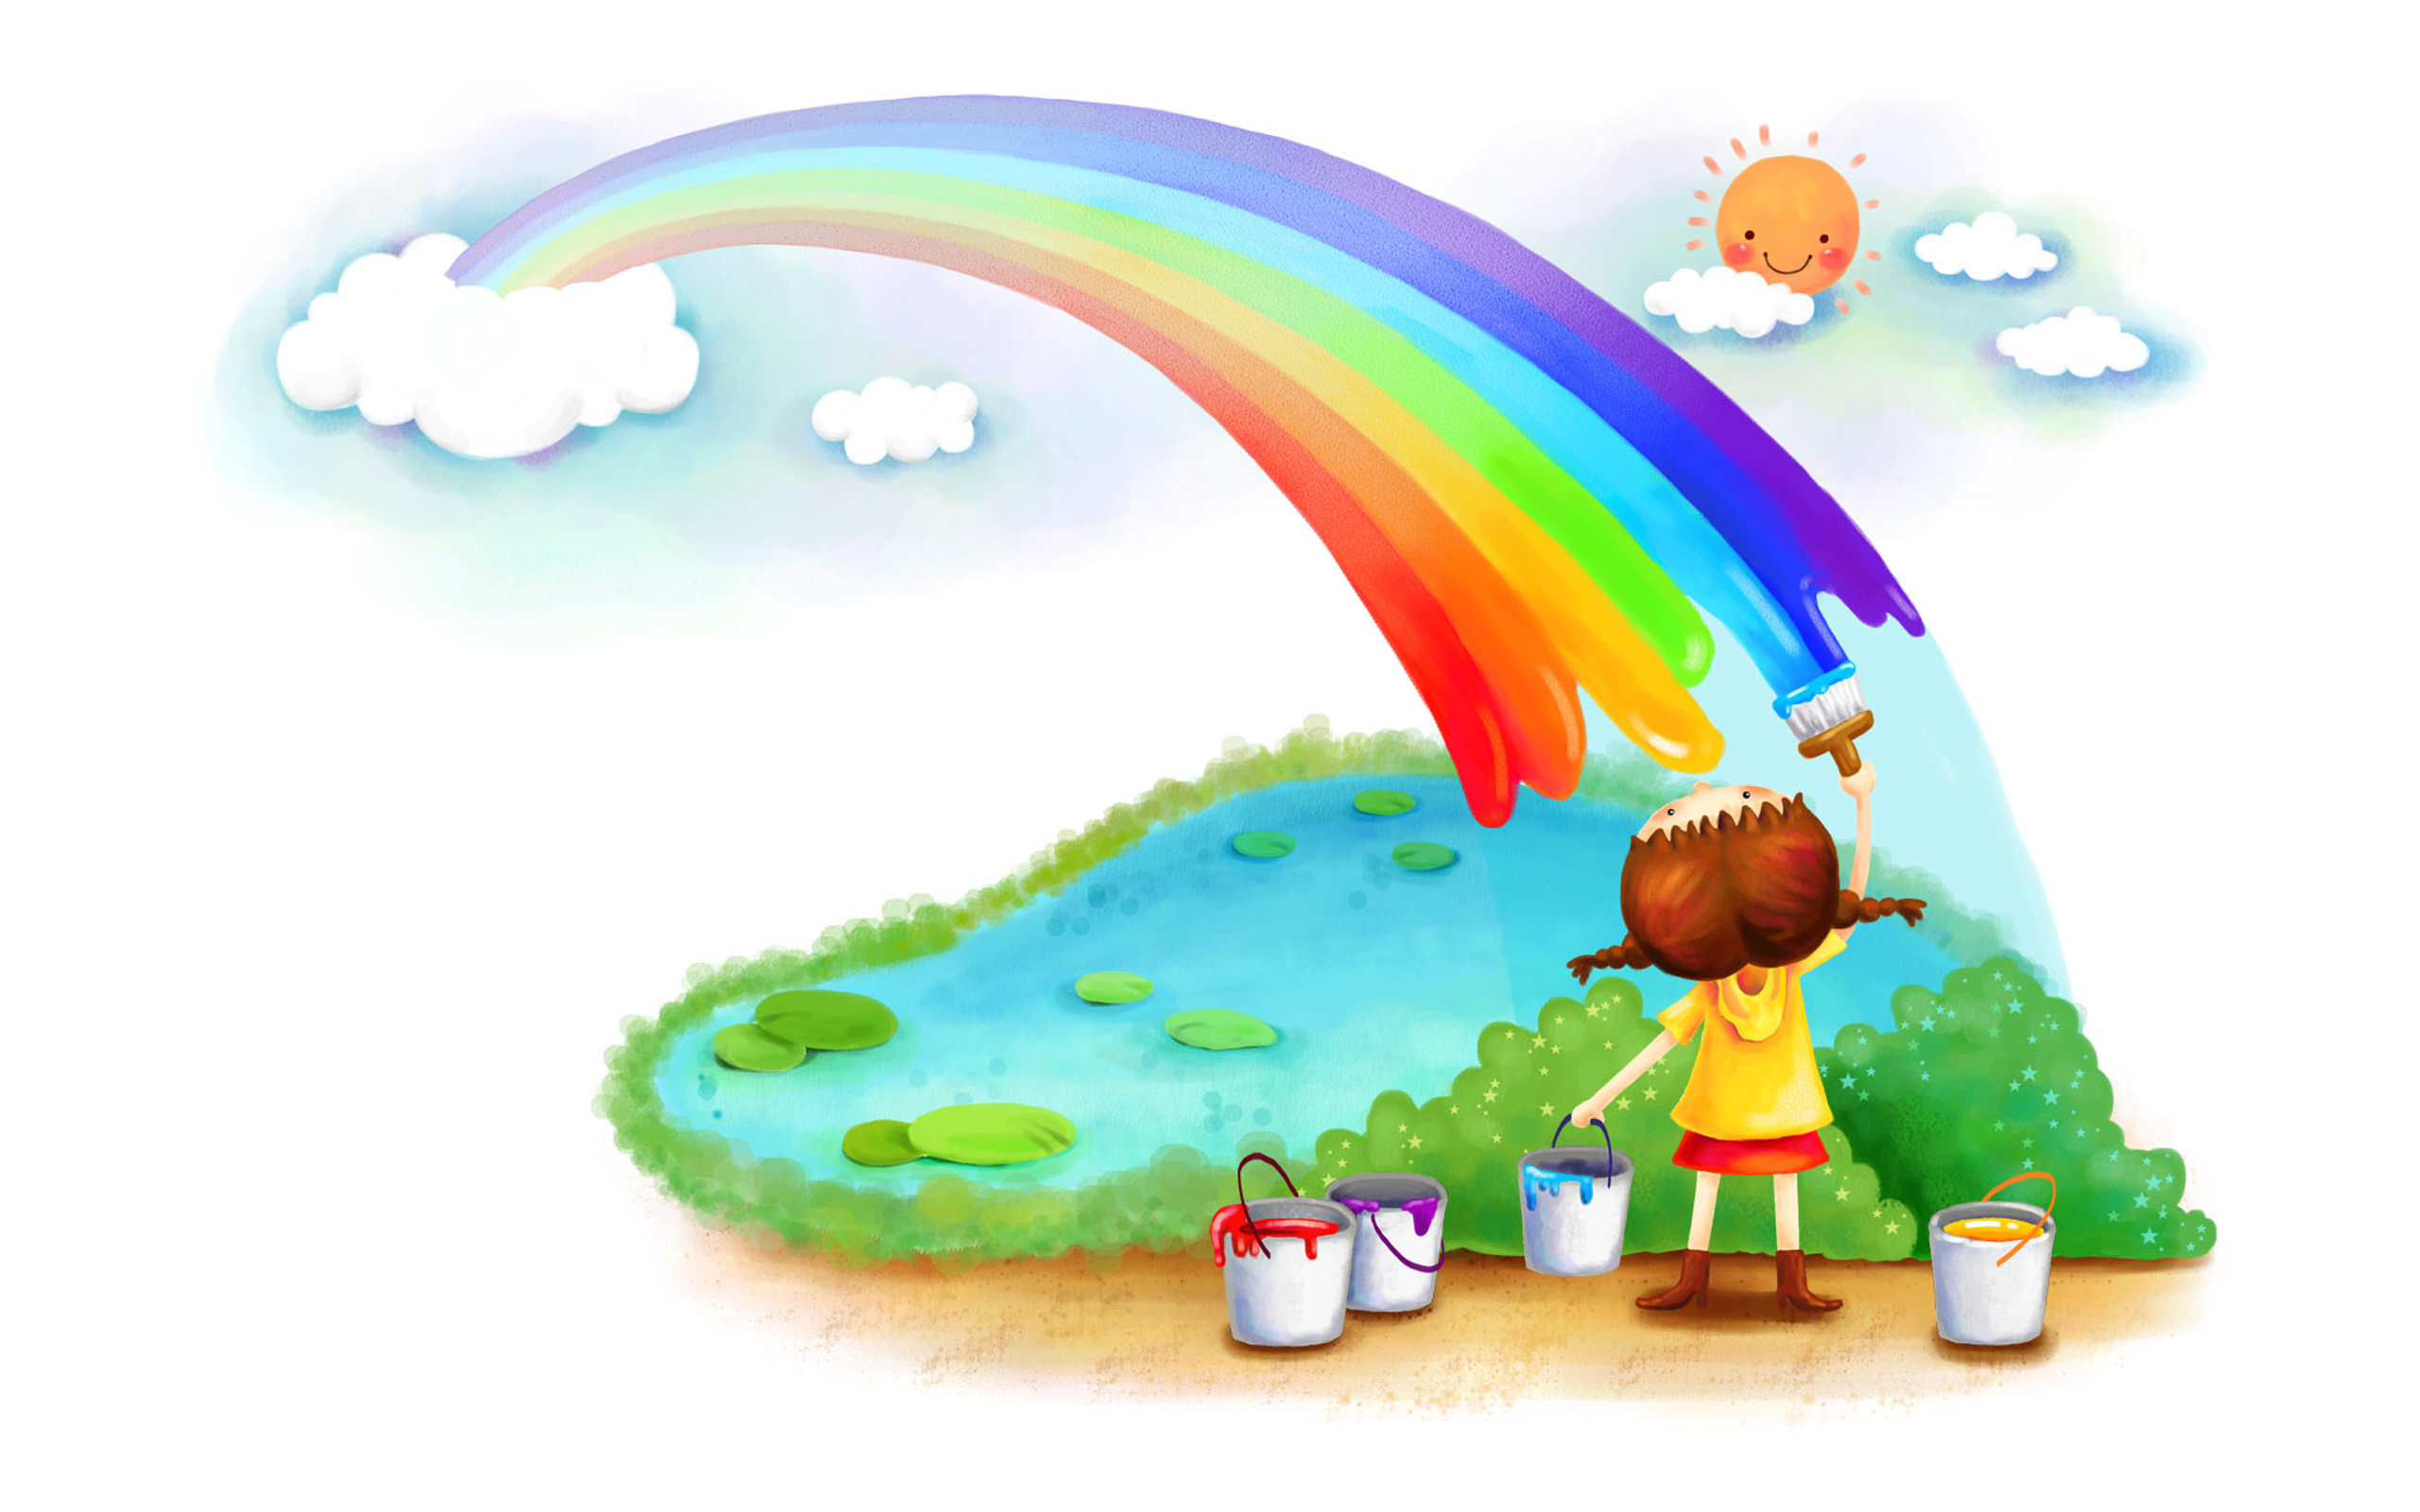 Painting A Rainbow Puter Desktop Wallpaper Pictures Image